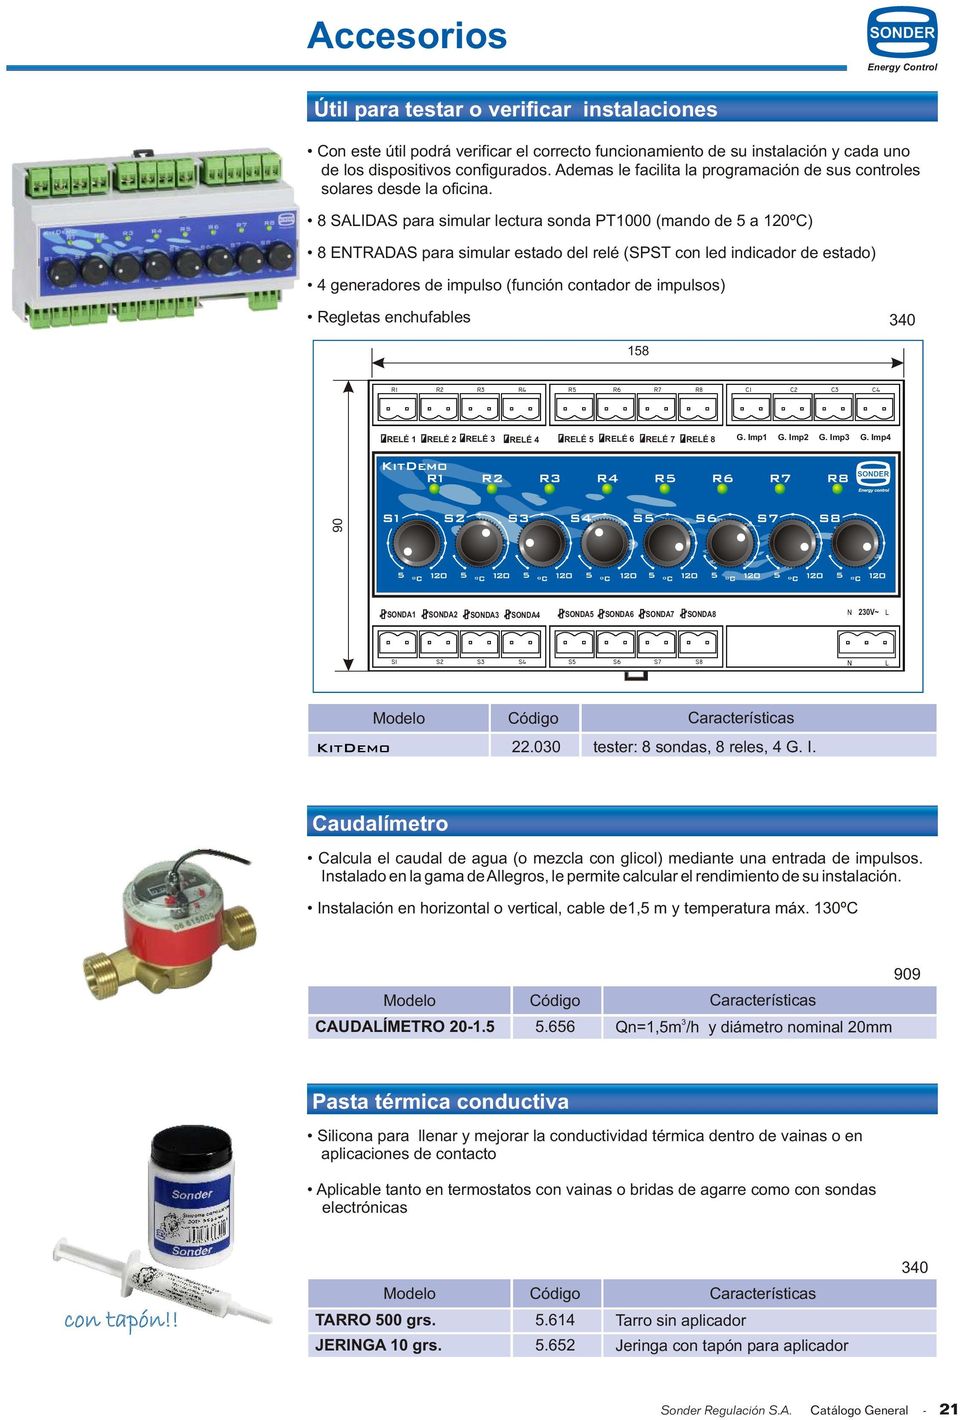 8 SAIDAS para simular lectura sonda PT000 (mando de 5 a 0º) 8 ETRADAS para simular estado del relé (SPST con led indicador de estado) 4 generadores de impulso (función contador de impulsos) Regletas